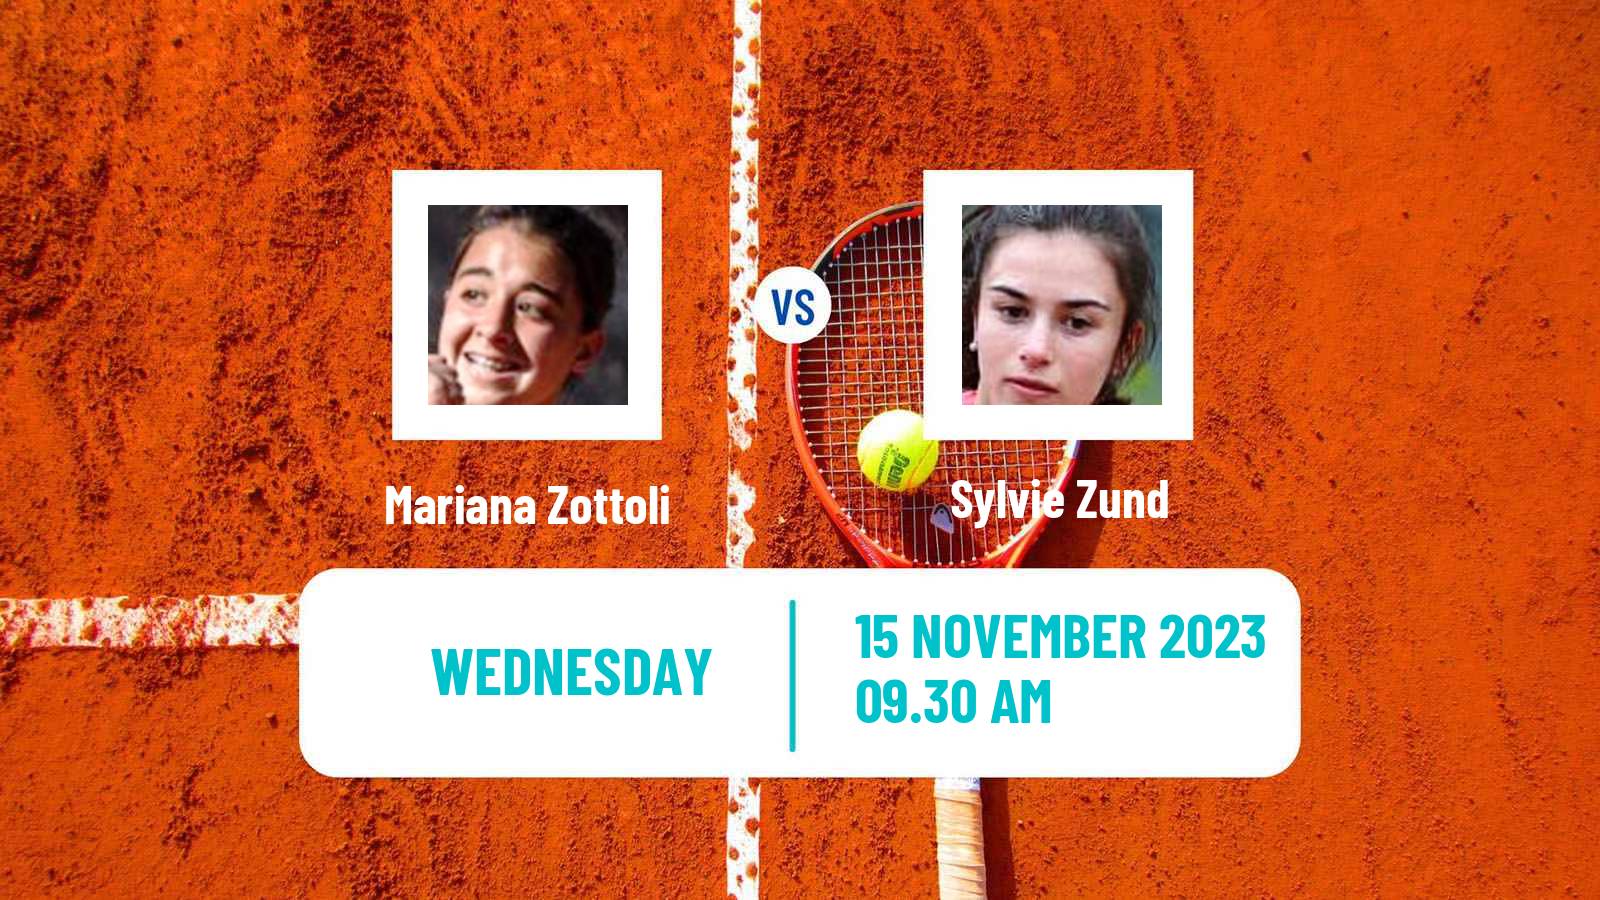 Tennis ITF W15 Buenos Aires 2 Women Mariana Zottoli - Sylvie Zund